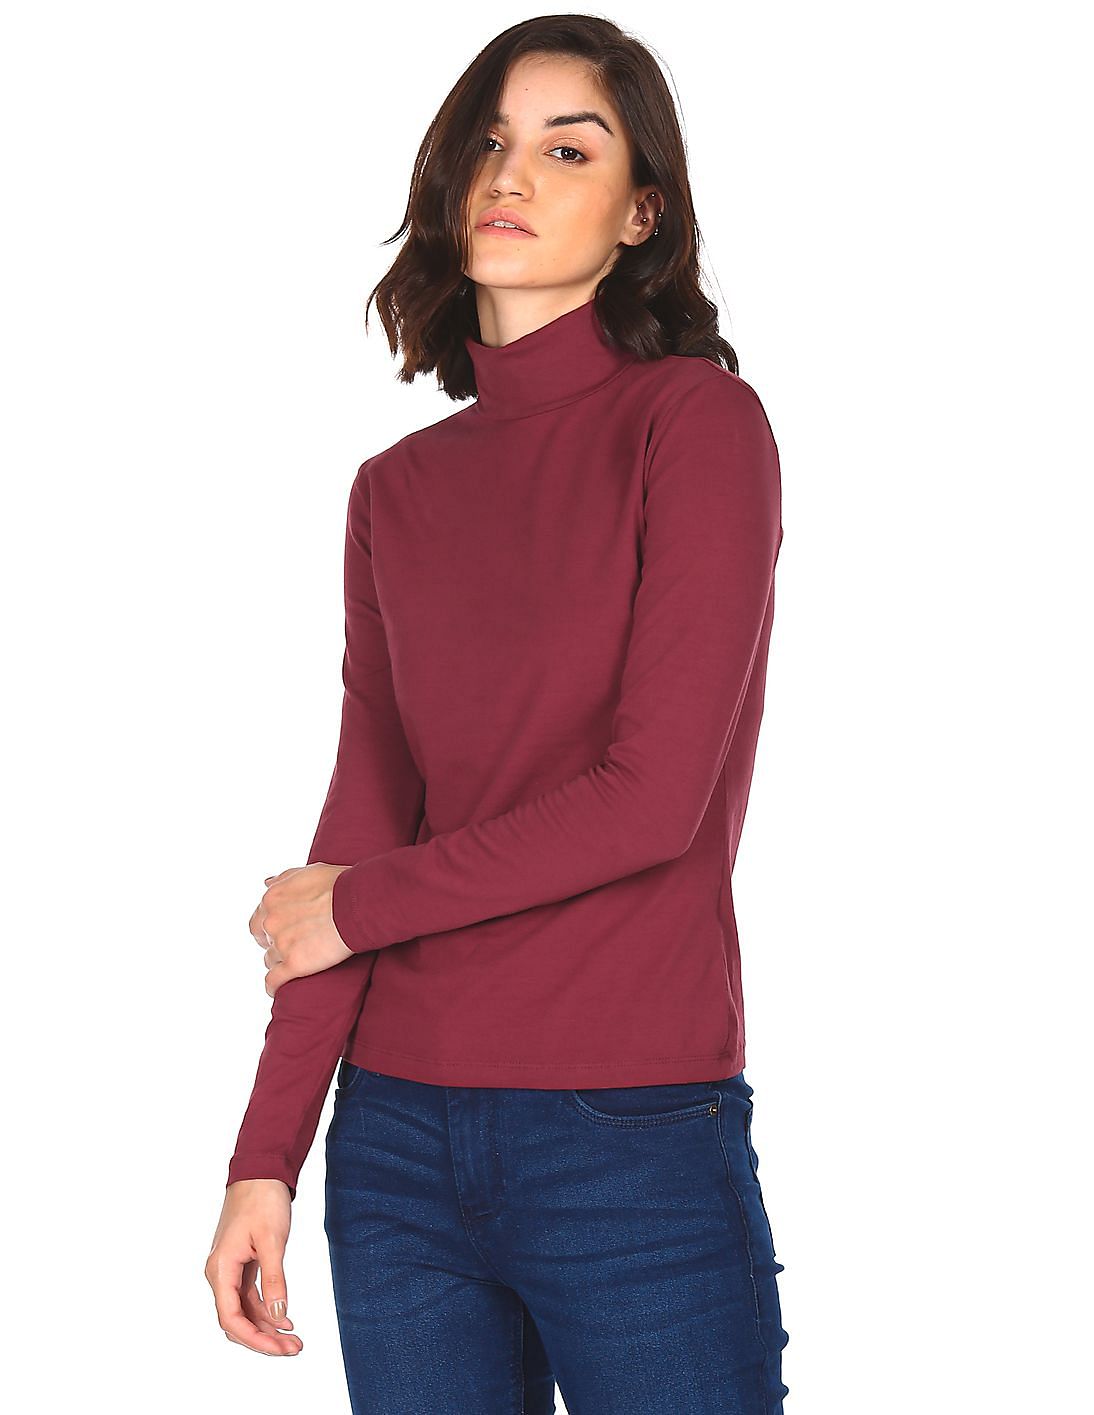 Buy Tommy Hilfiger Women Light Coral Round Neck Brand Print T-Shirt -  NNNOW.com